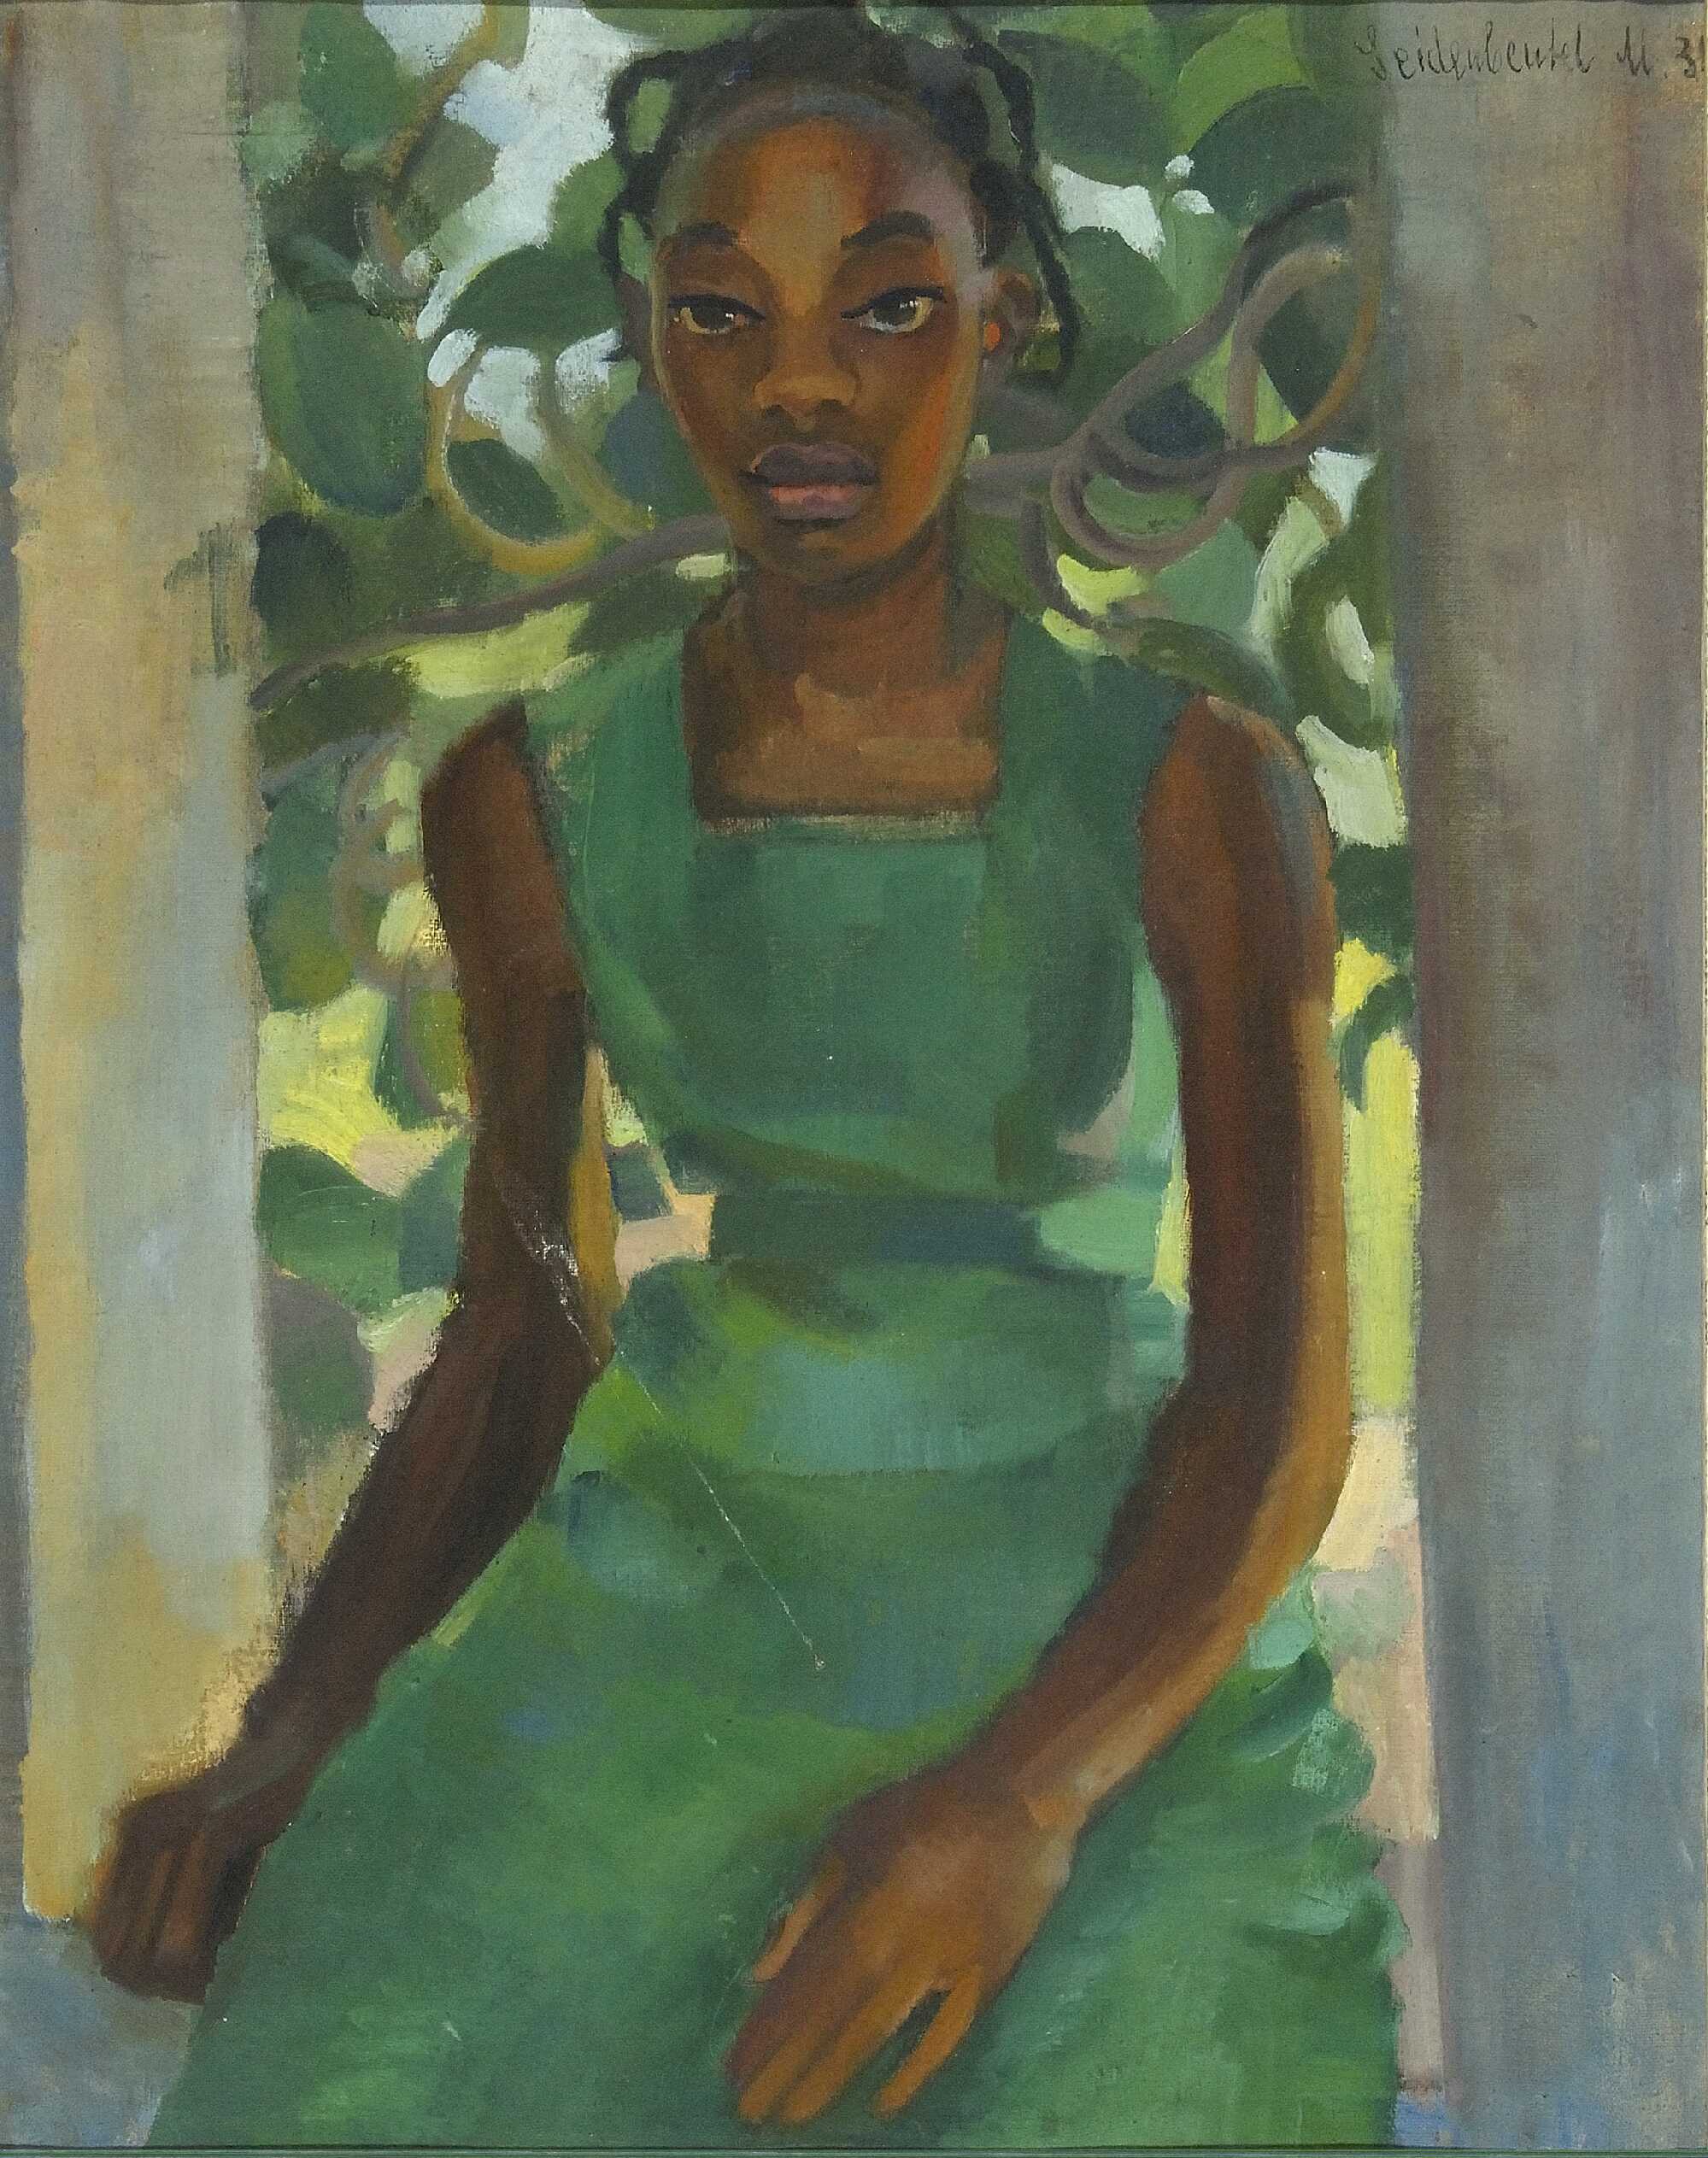 Niña con un vestido verde by Menasze Seidenbeutel - 1931 - 60 x 40 cm Jewish Historical Institute